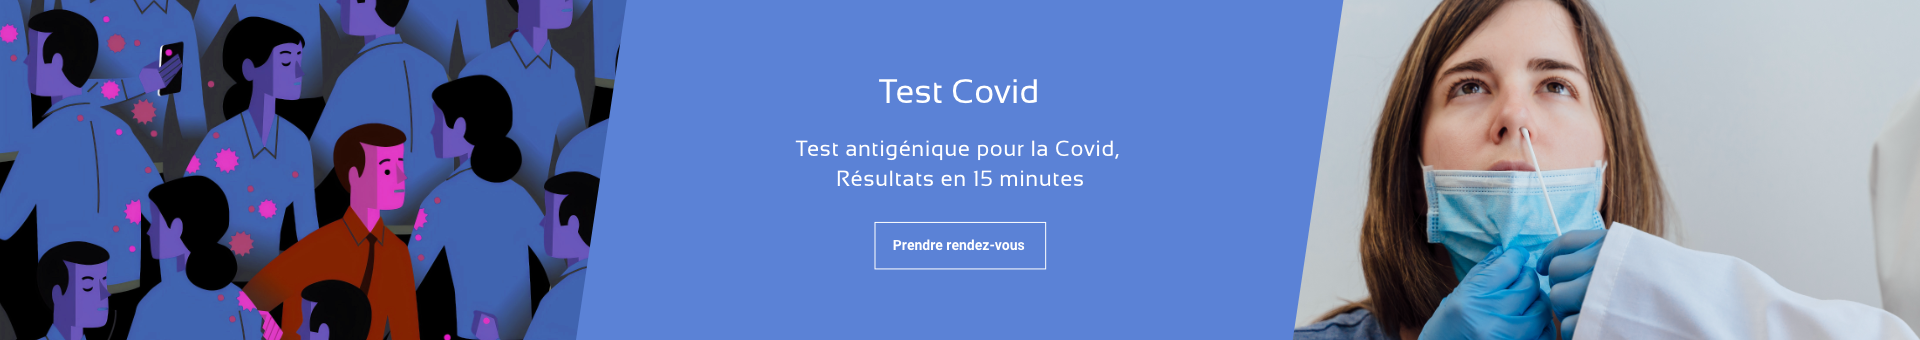 tests covid